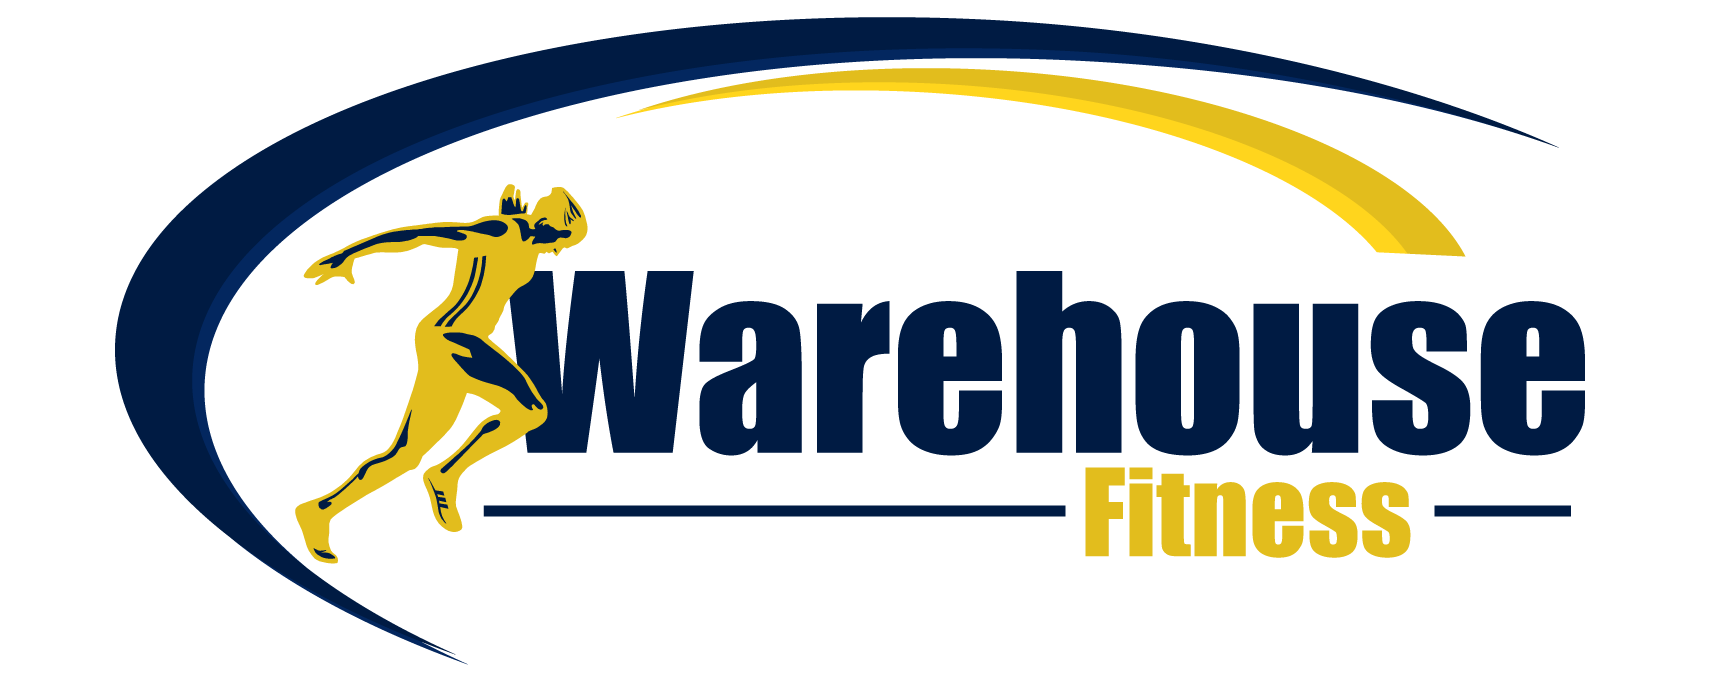 Warehouse Fitness